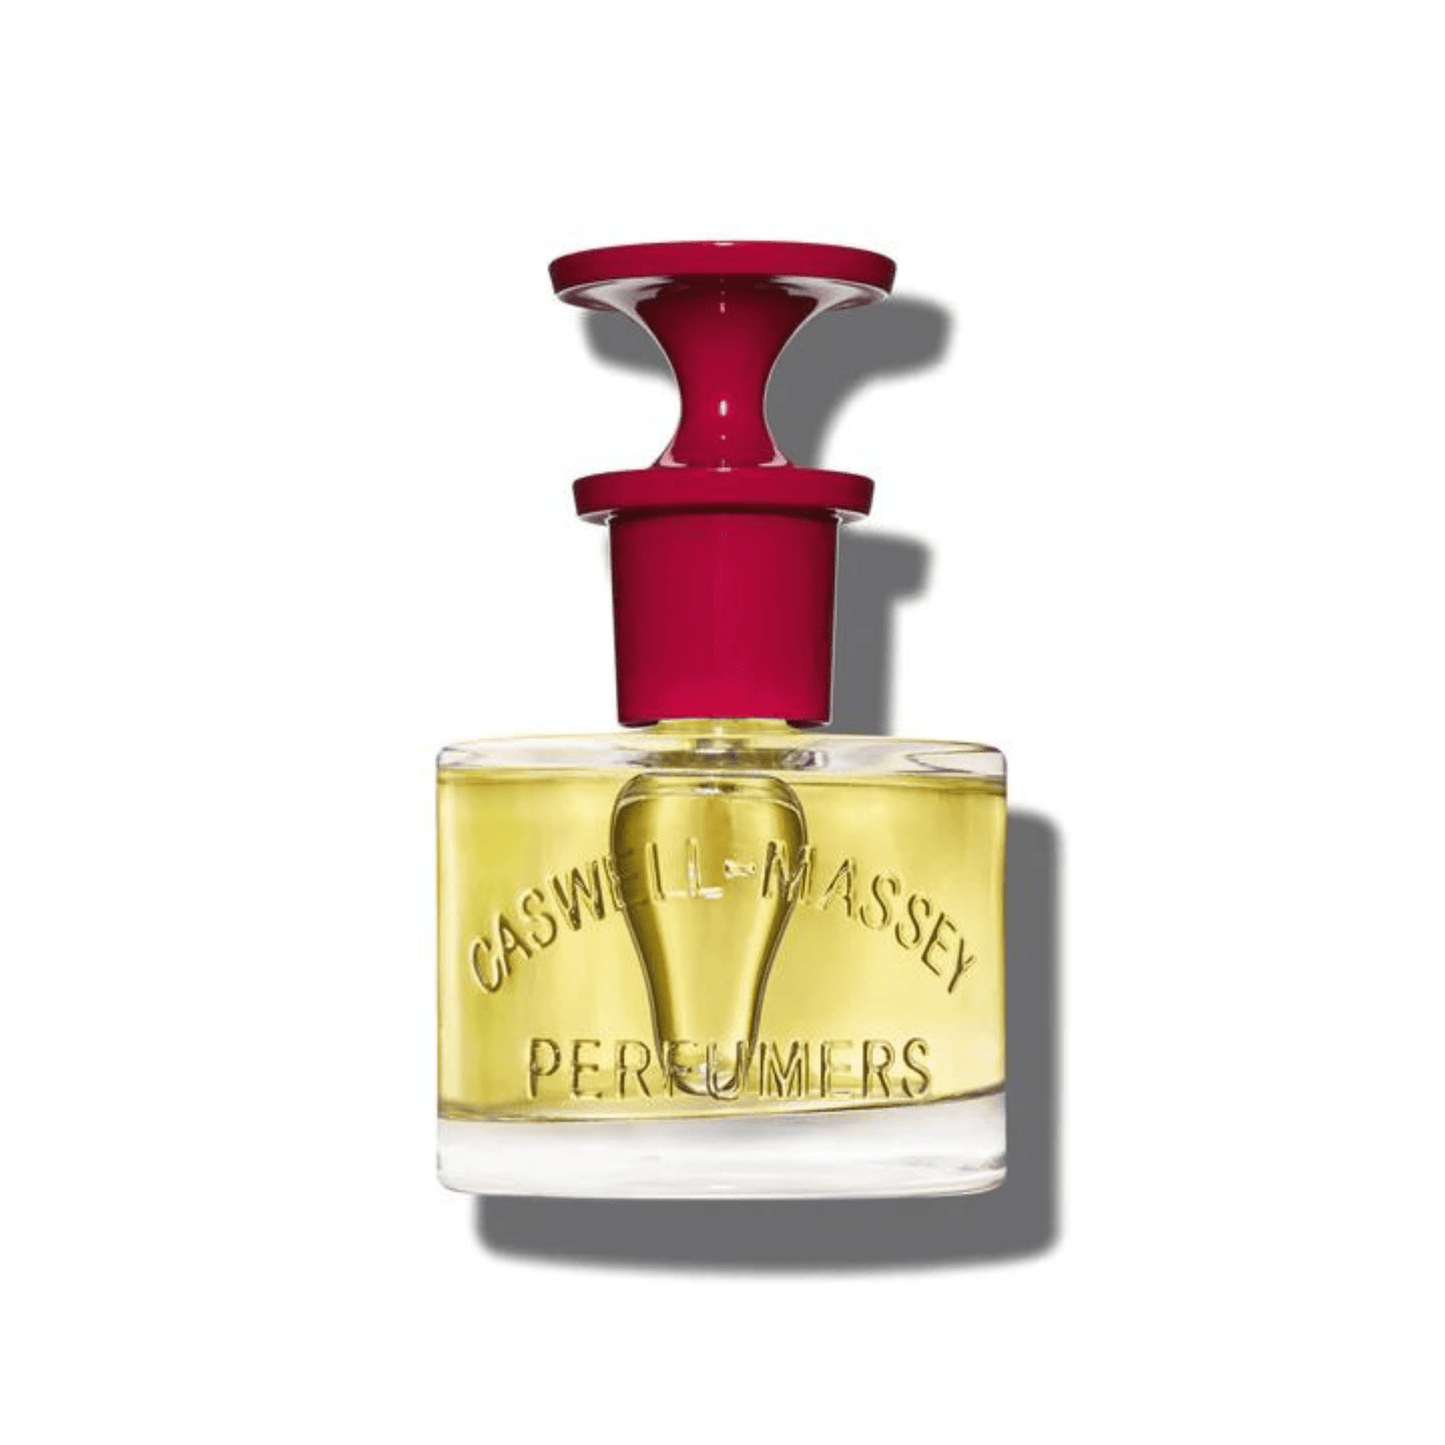 Primary Image of Marem Perfume